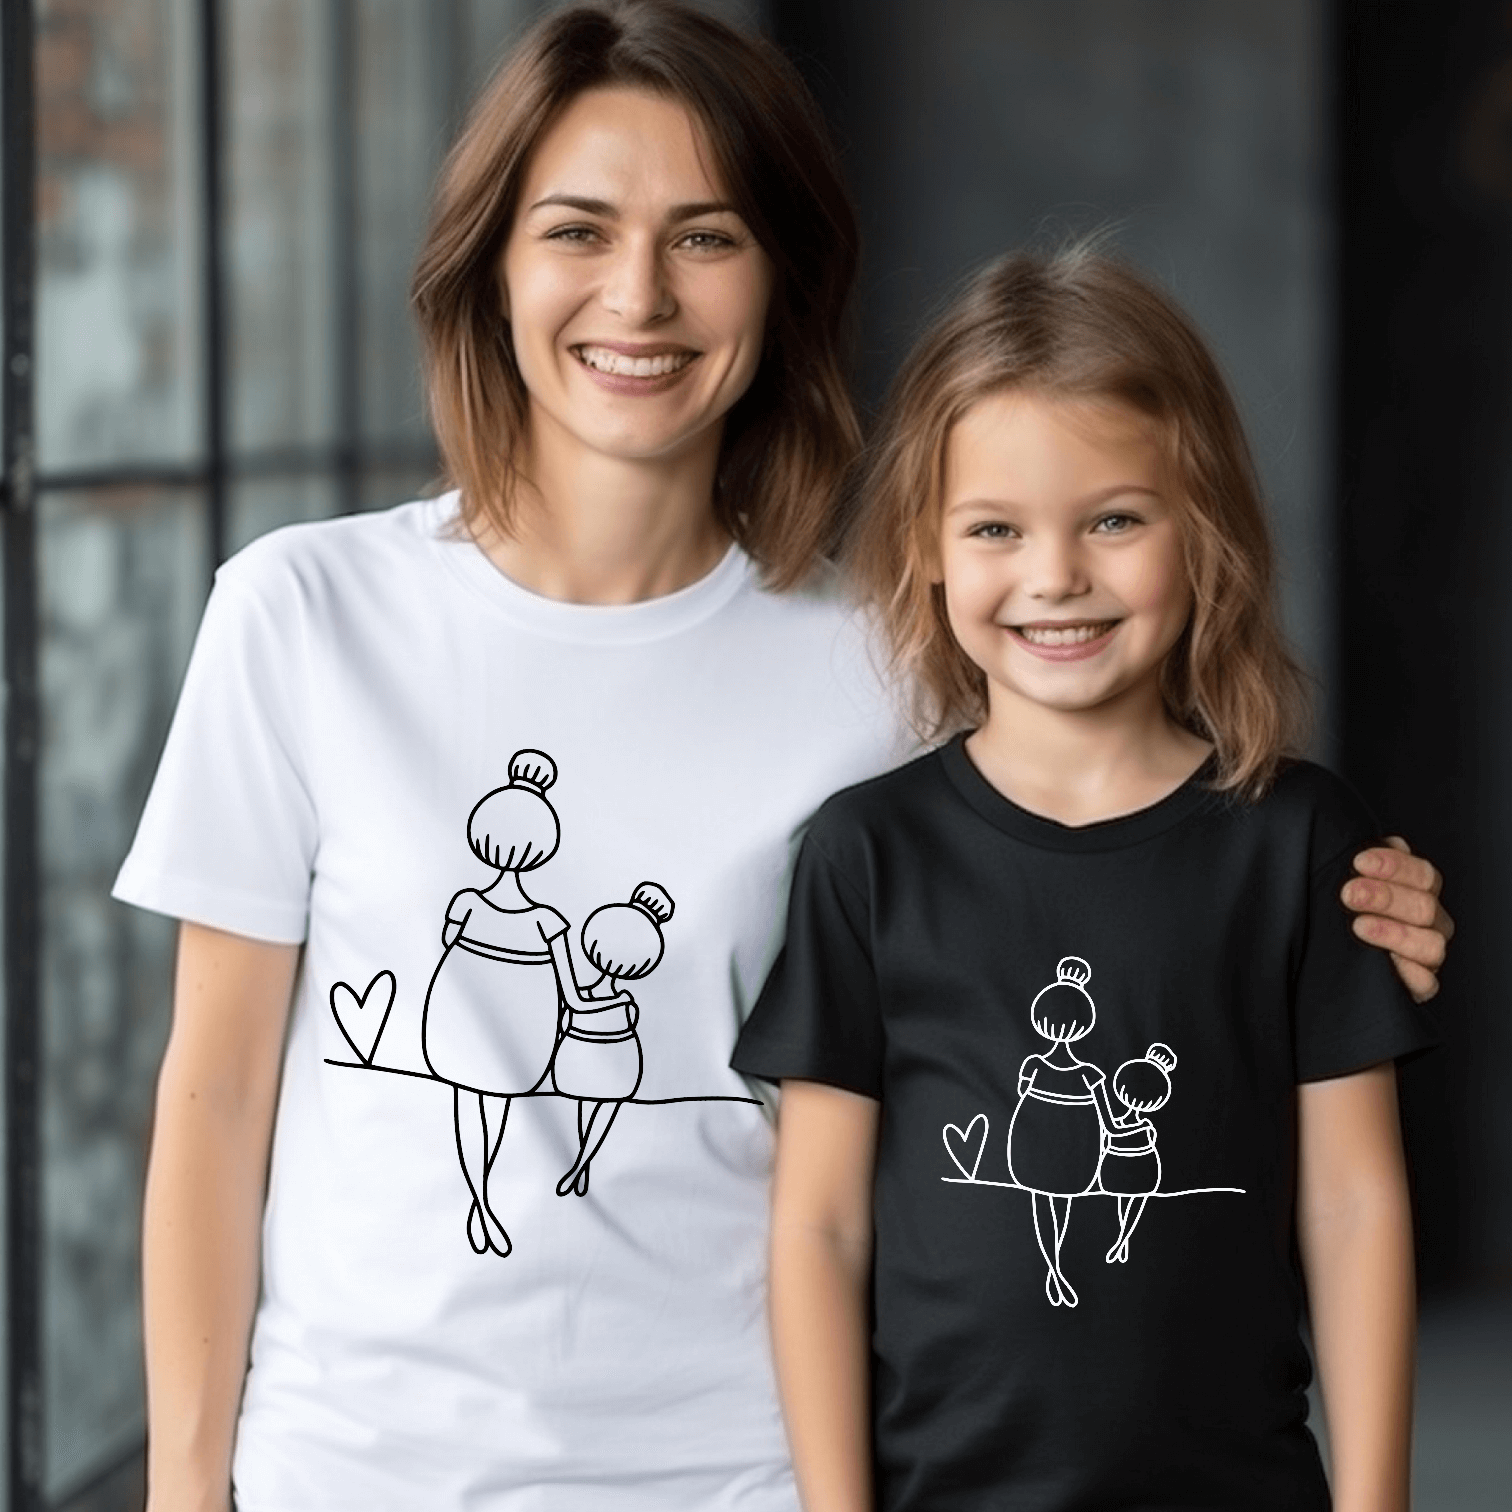 Mami e girl camicia amore